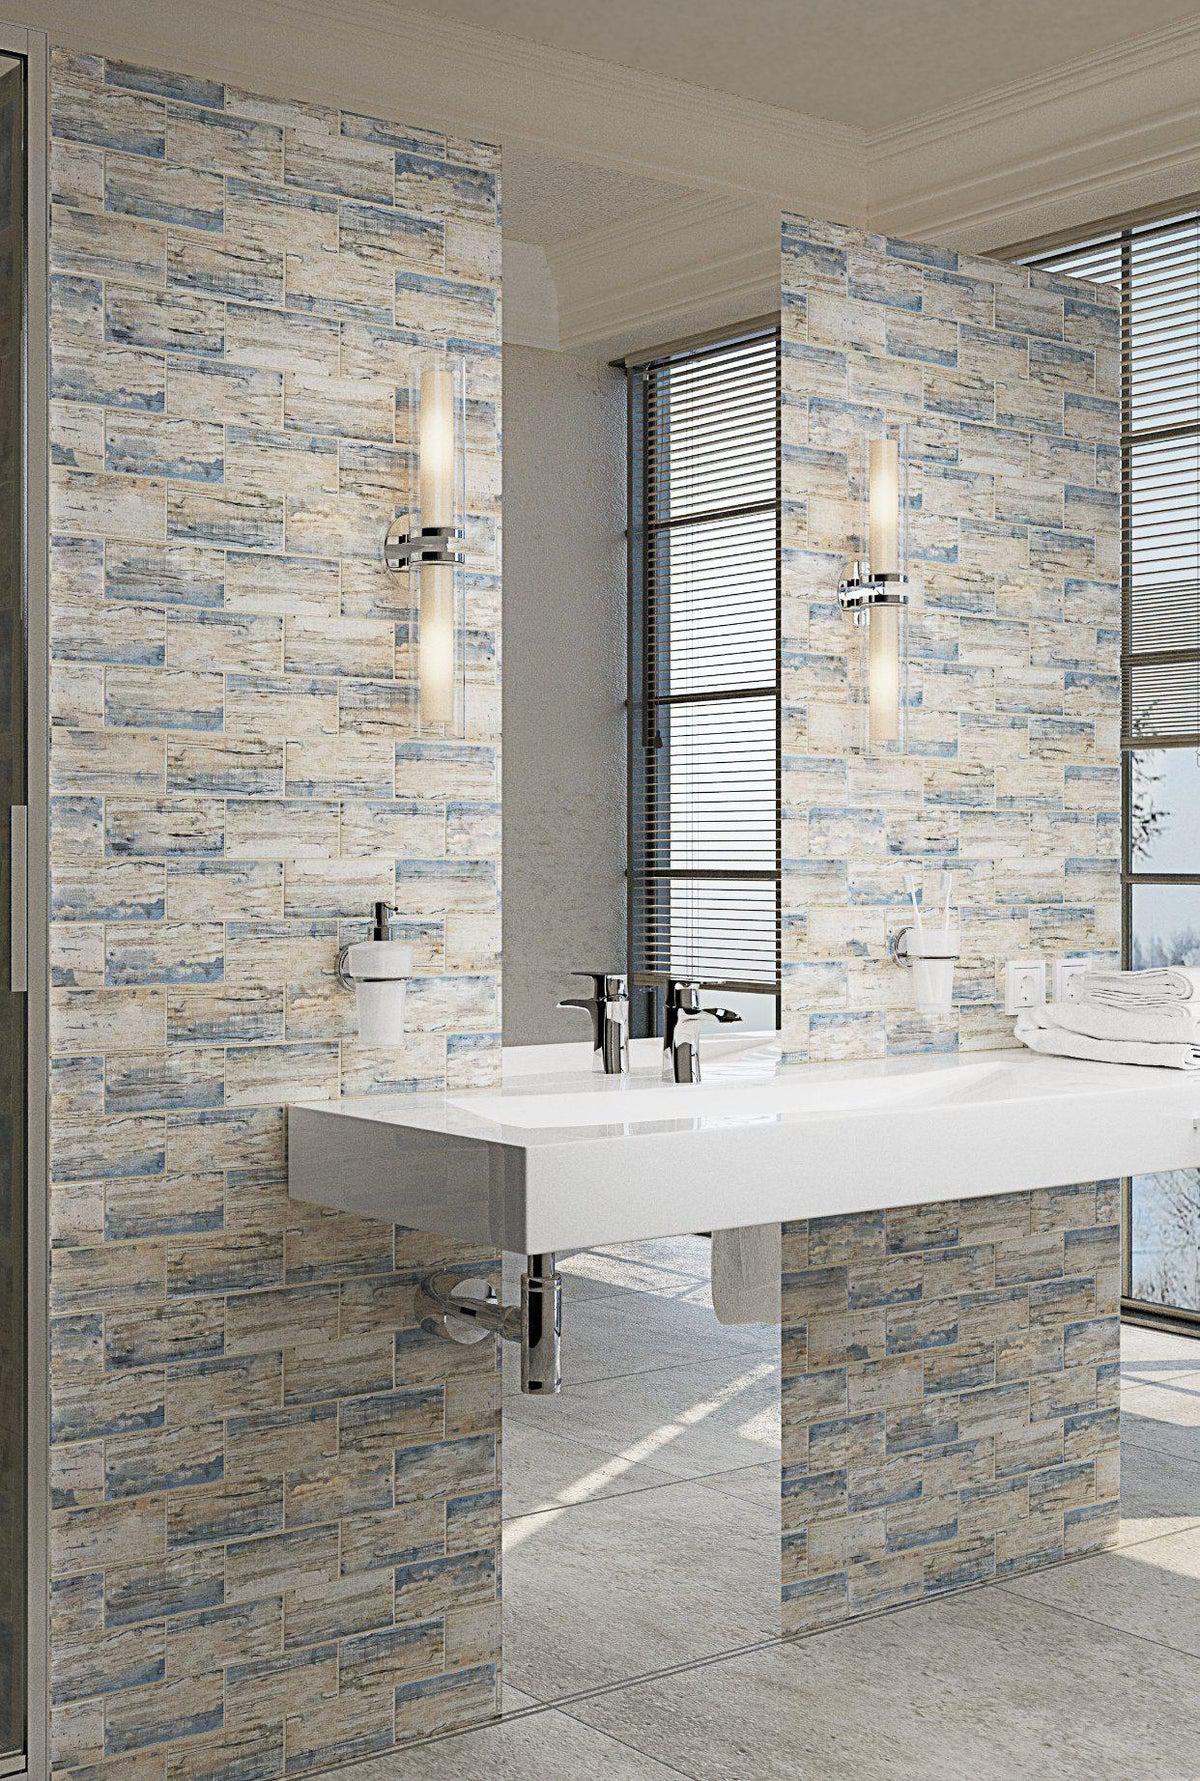 Modern Bathroom Vanity Tile Wall with Glass Subway Tiles